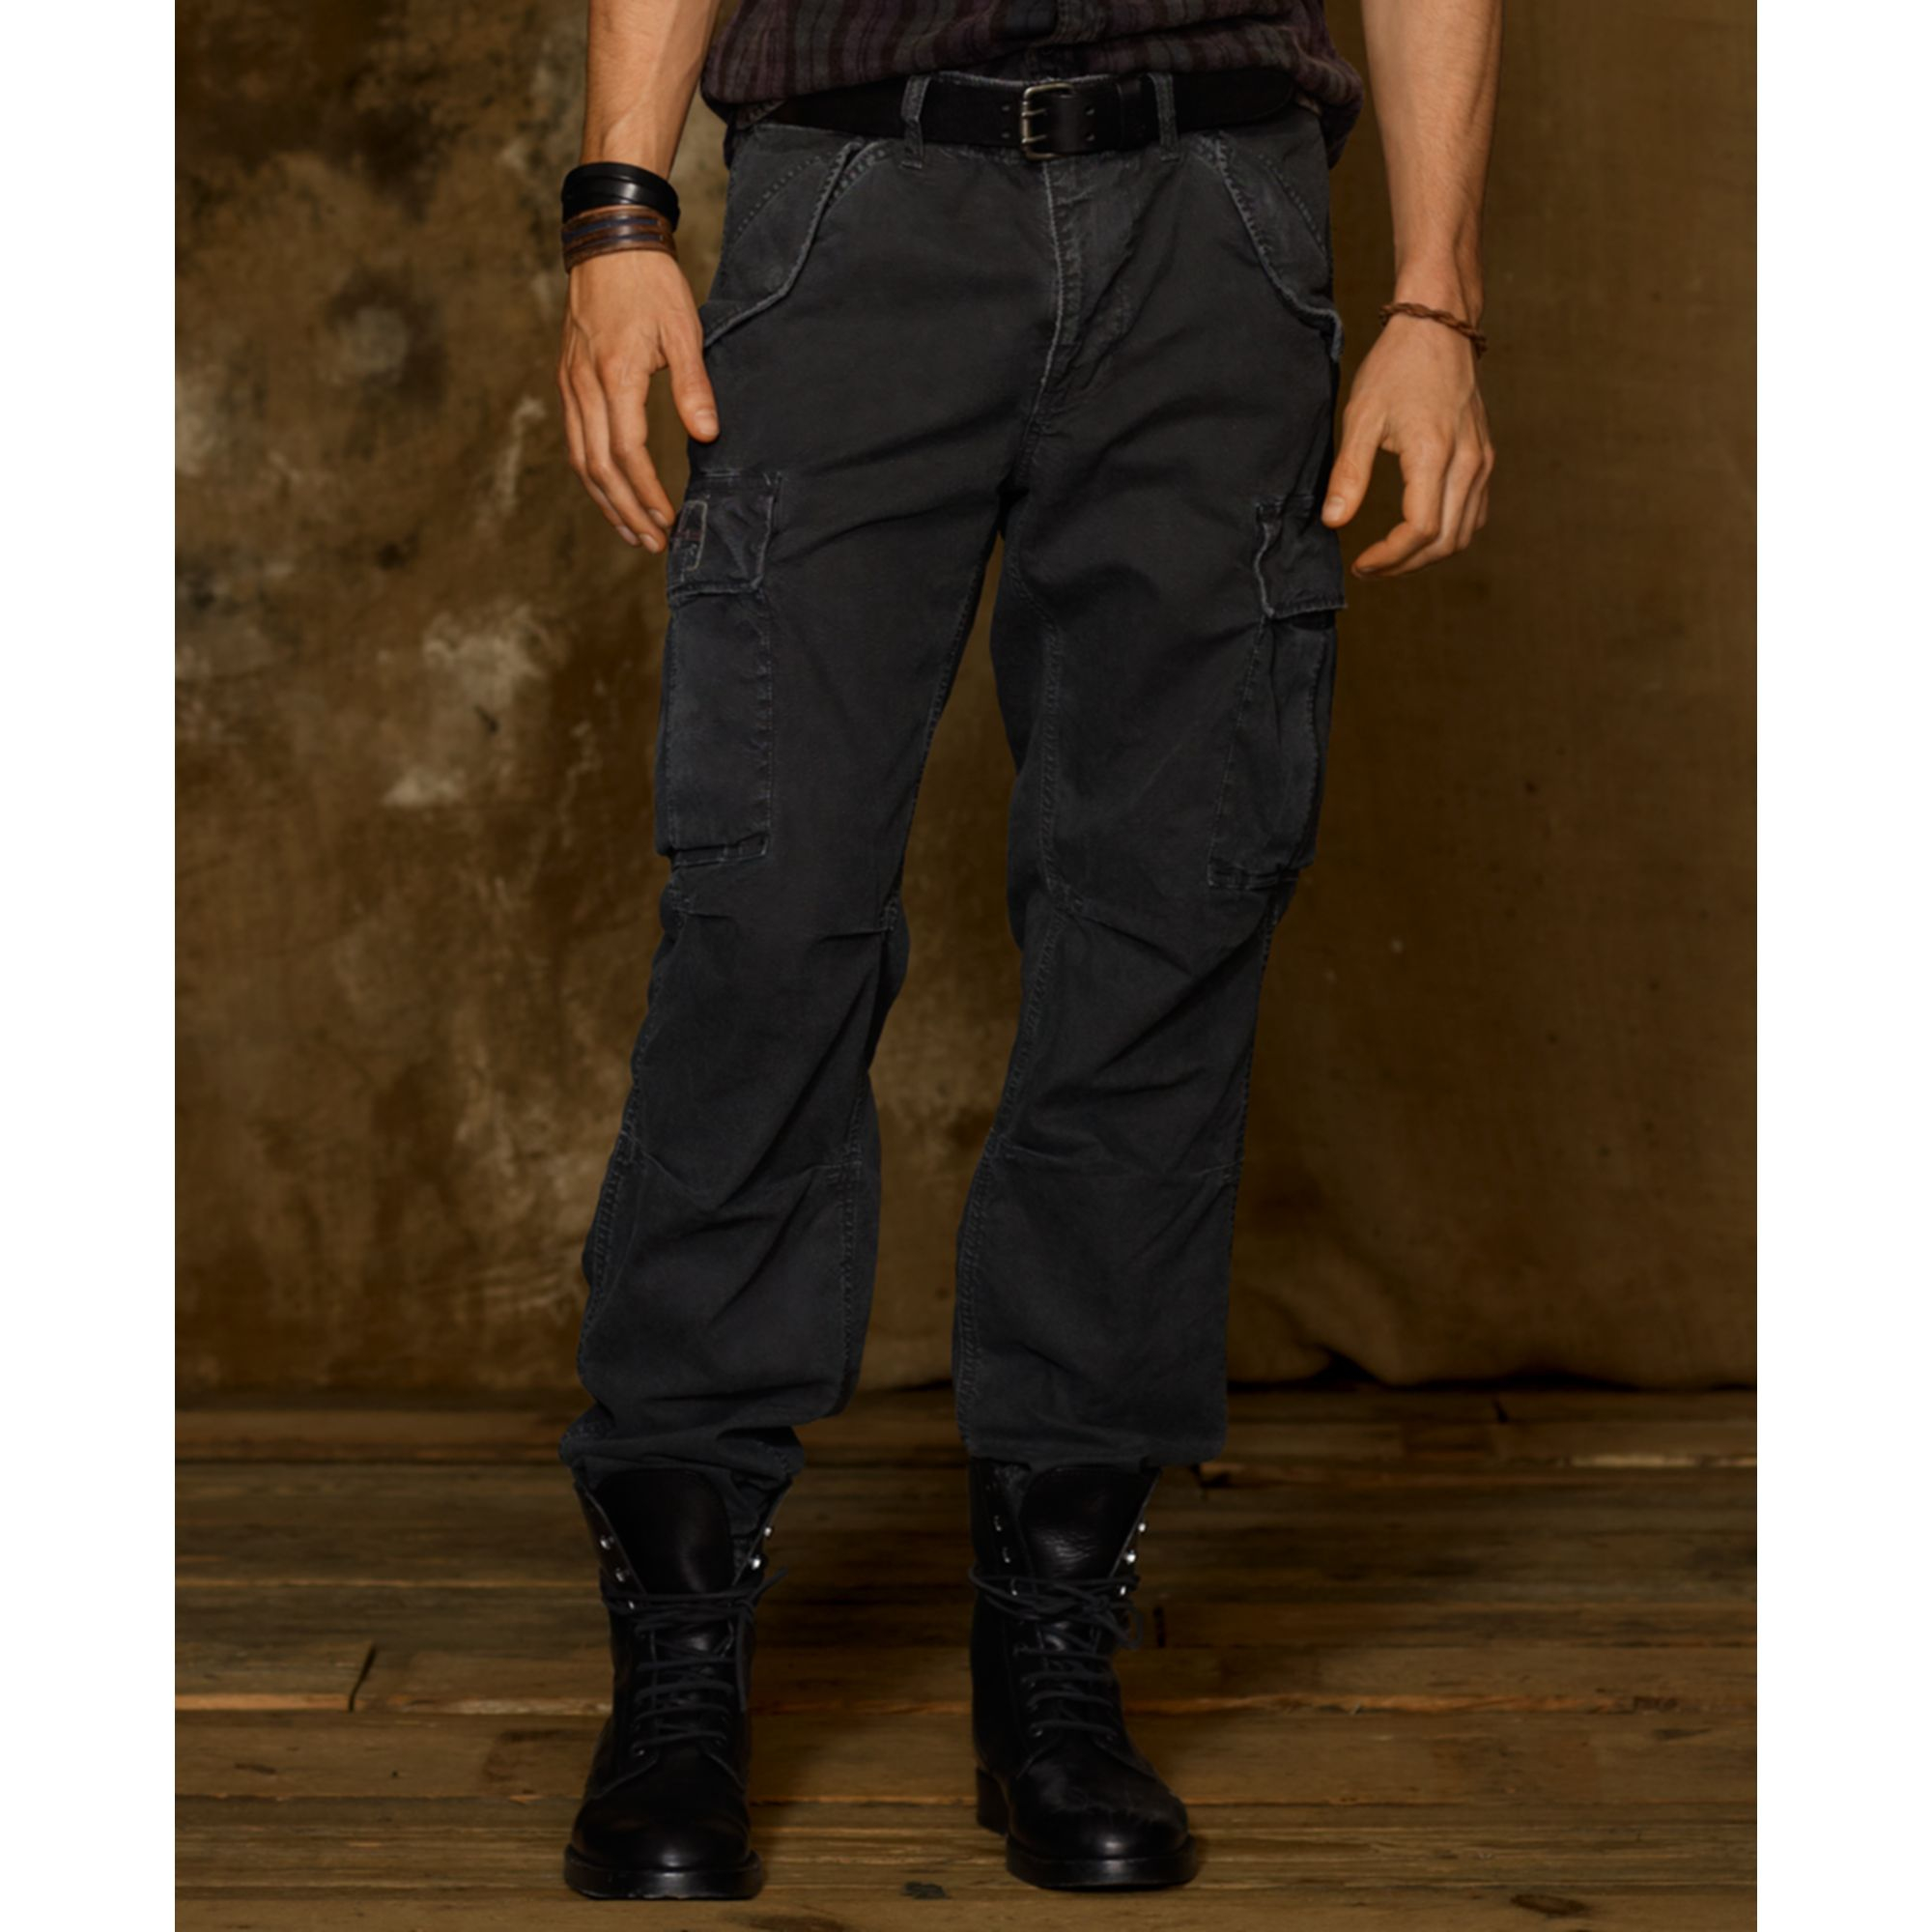 Denim & Supply Ralph Lauren Field Cargo Pants in Black Denim (Black) for  Men - Lyst